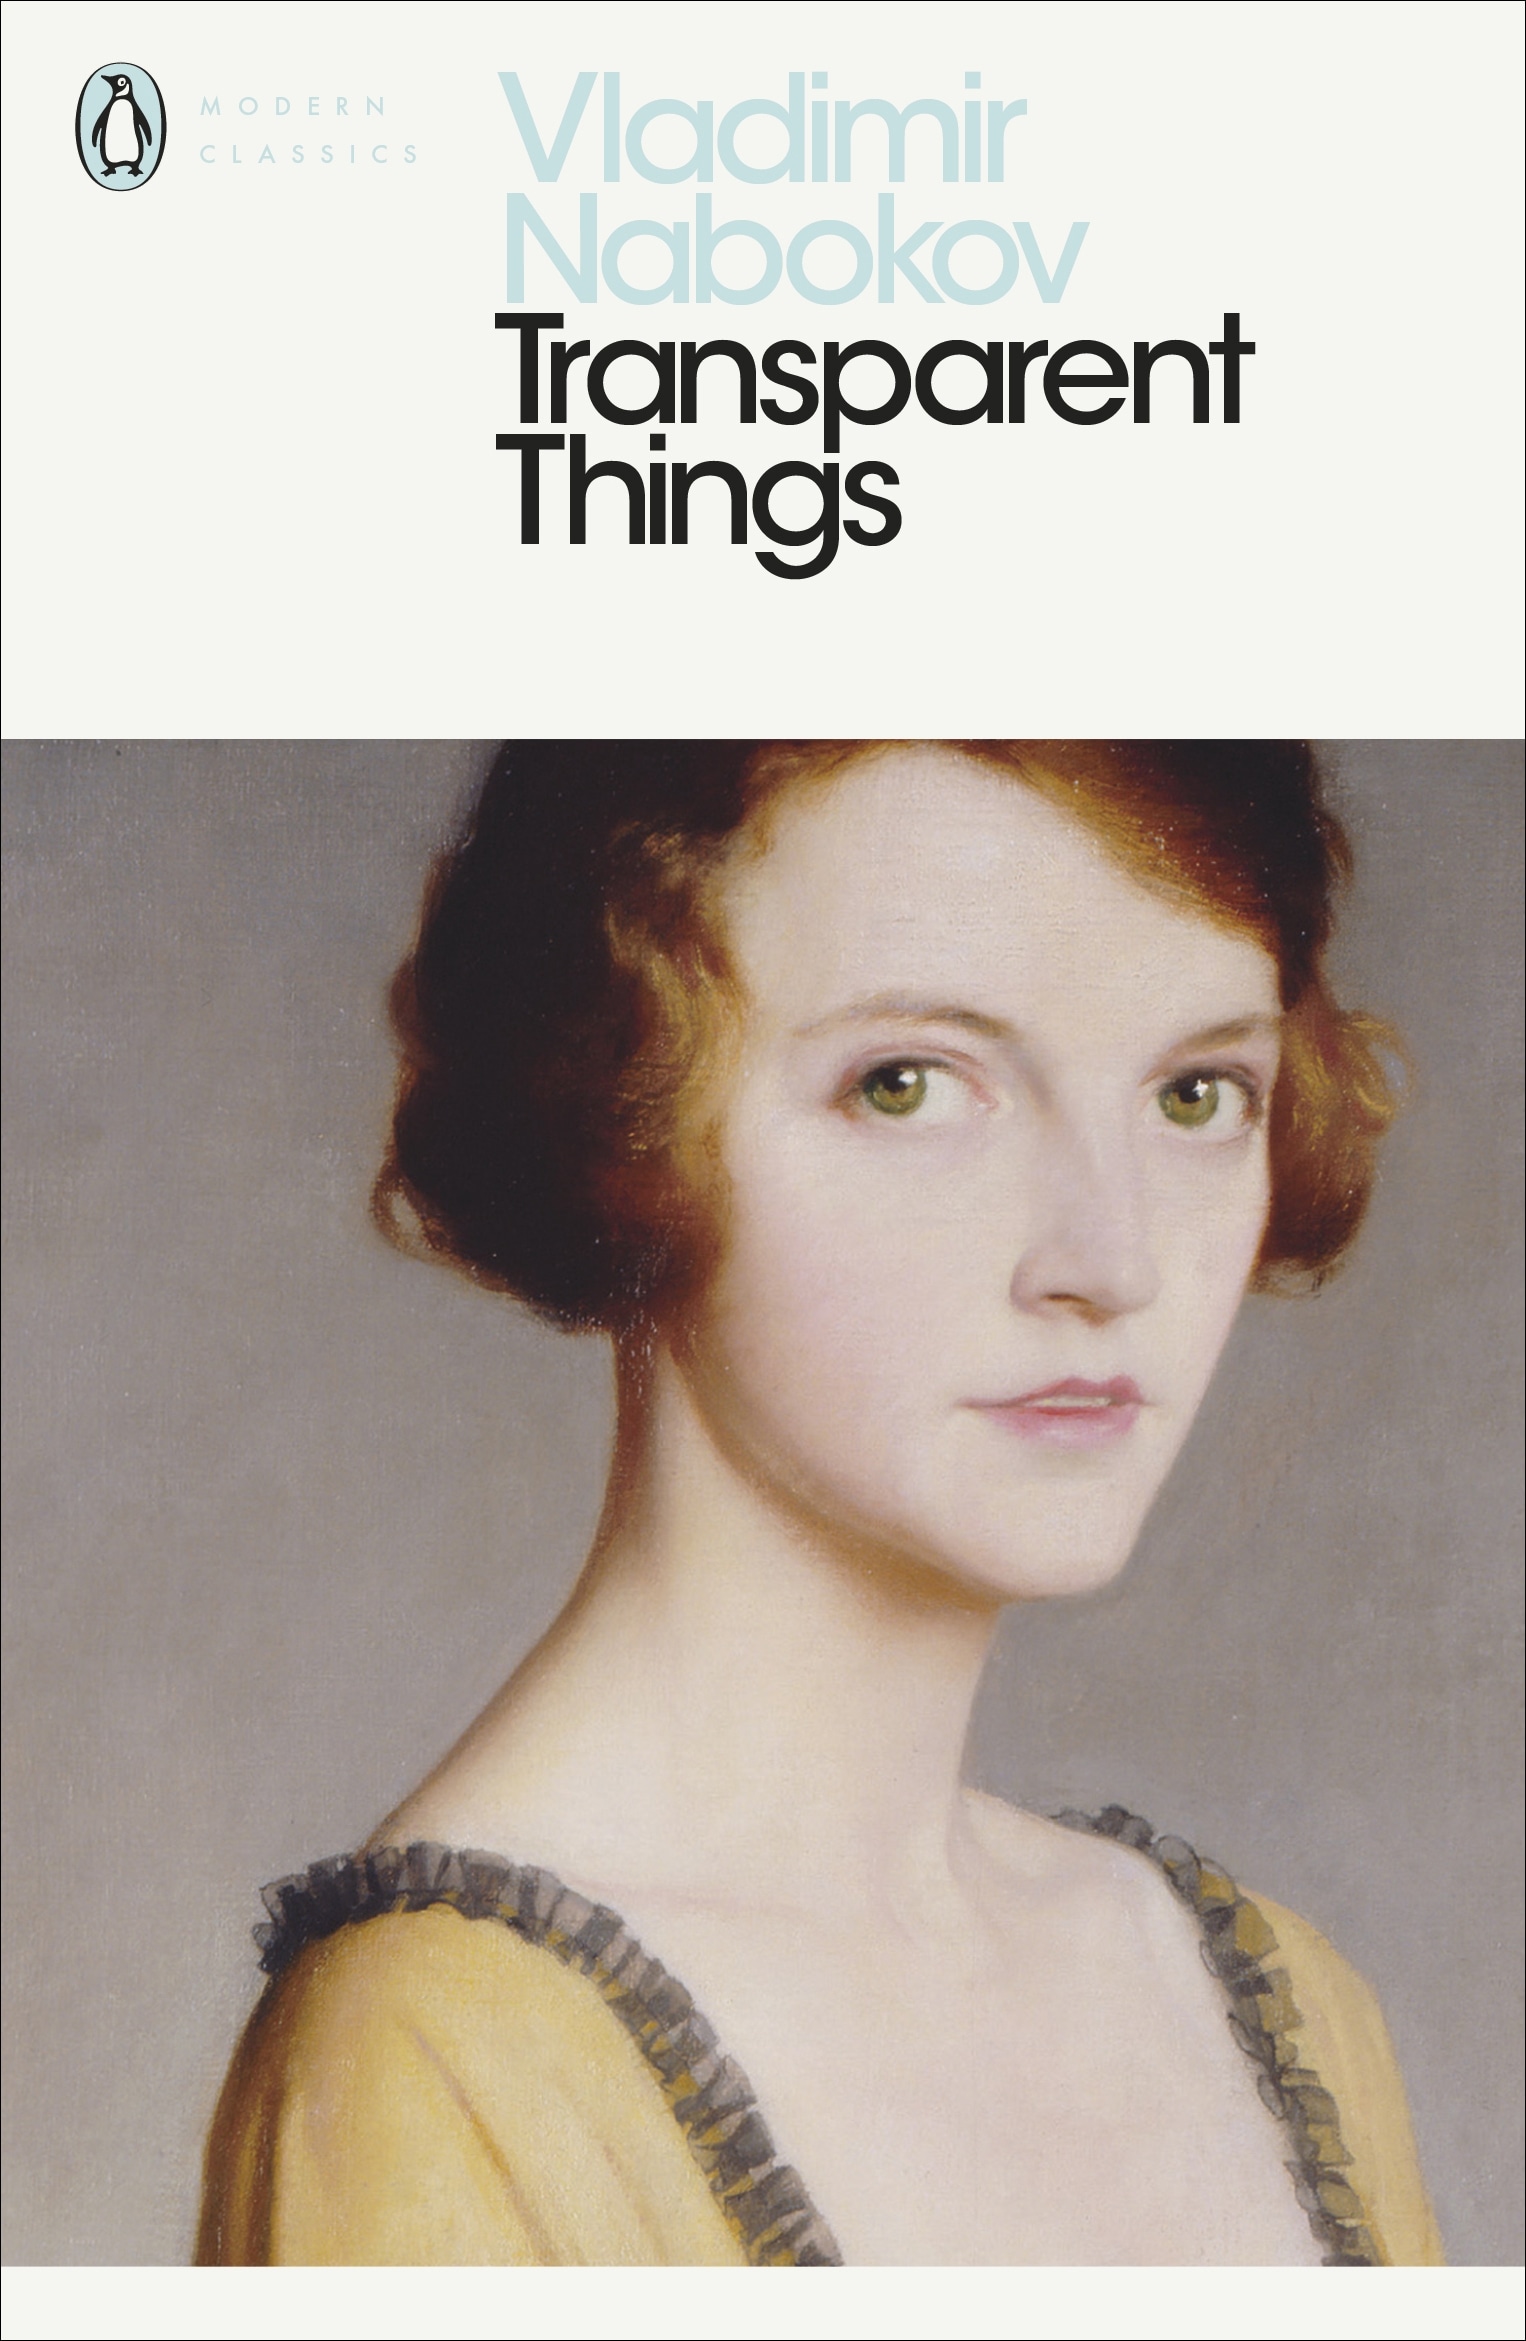 Book “Transparent Things” by Vladimir Nabokov — February 3, 2011